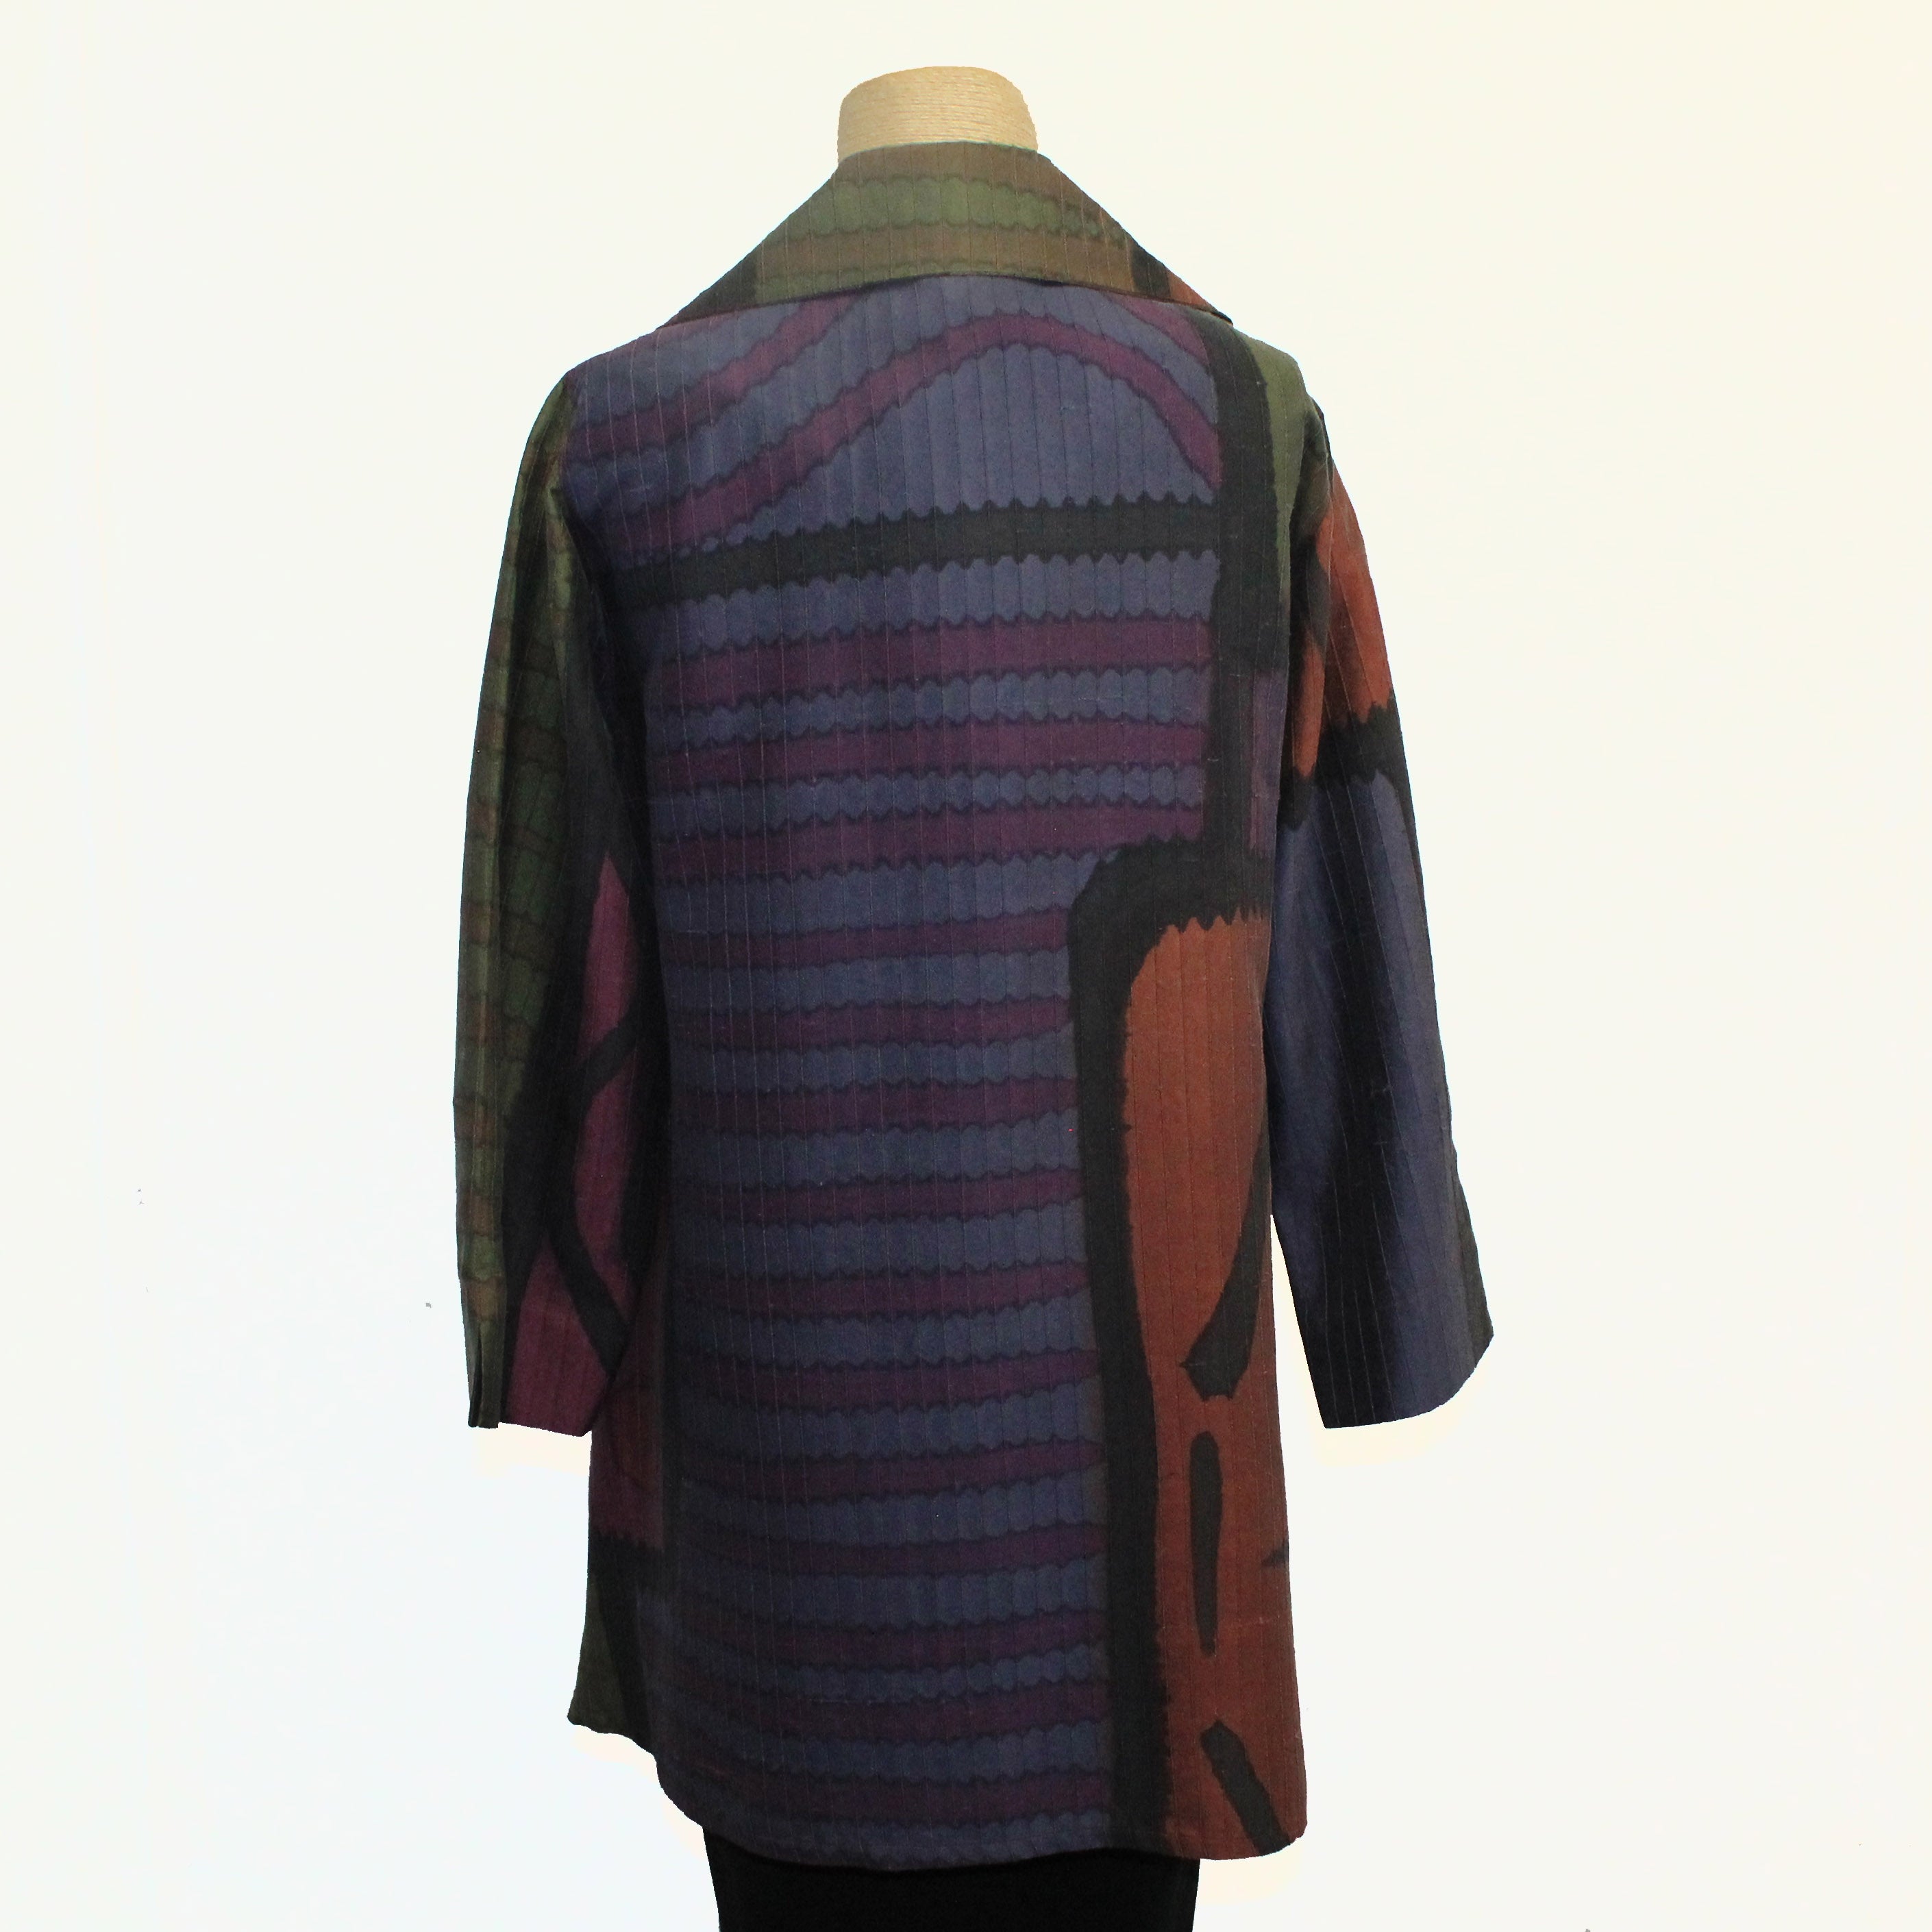 Kay Chapman Shirt,Dream, Patchwork, Olive/Blue/Purple/Rust, S